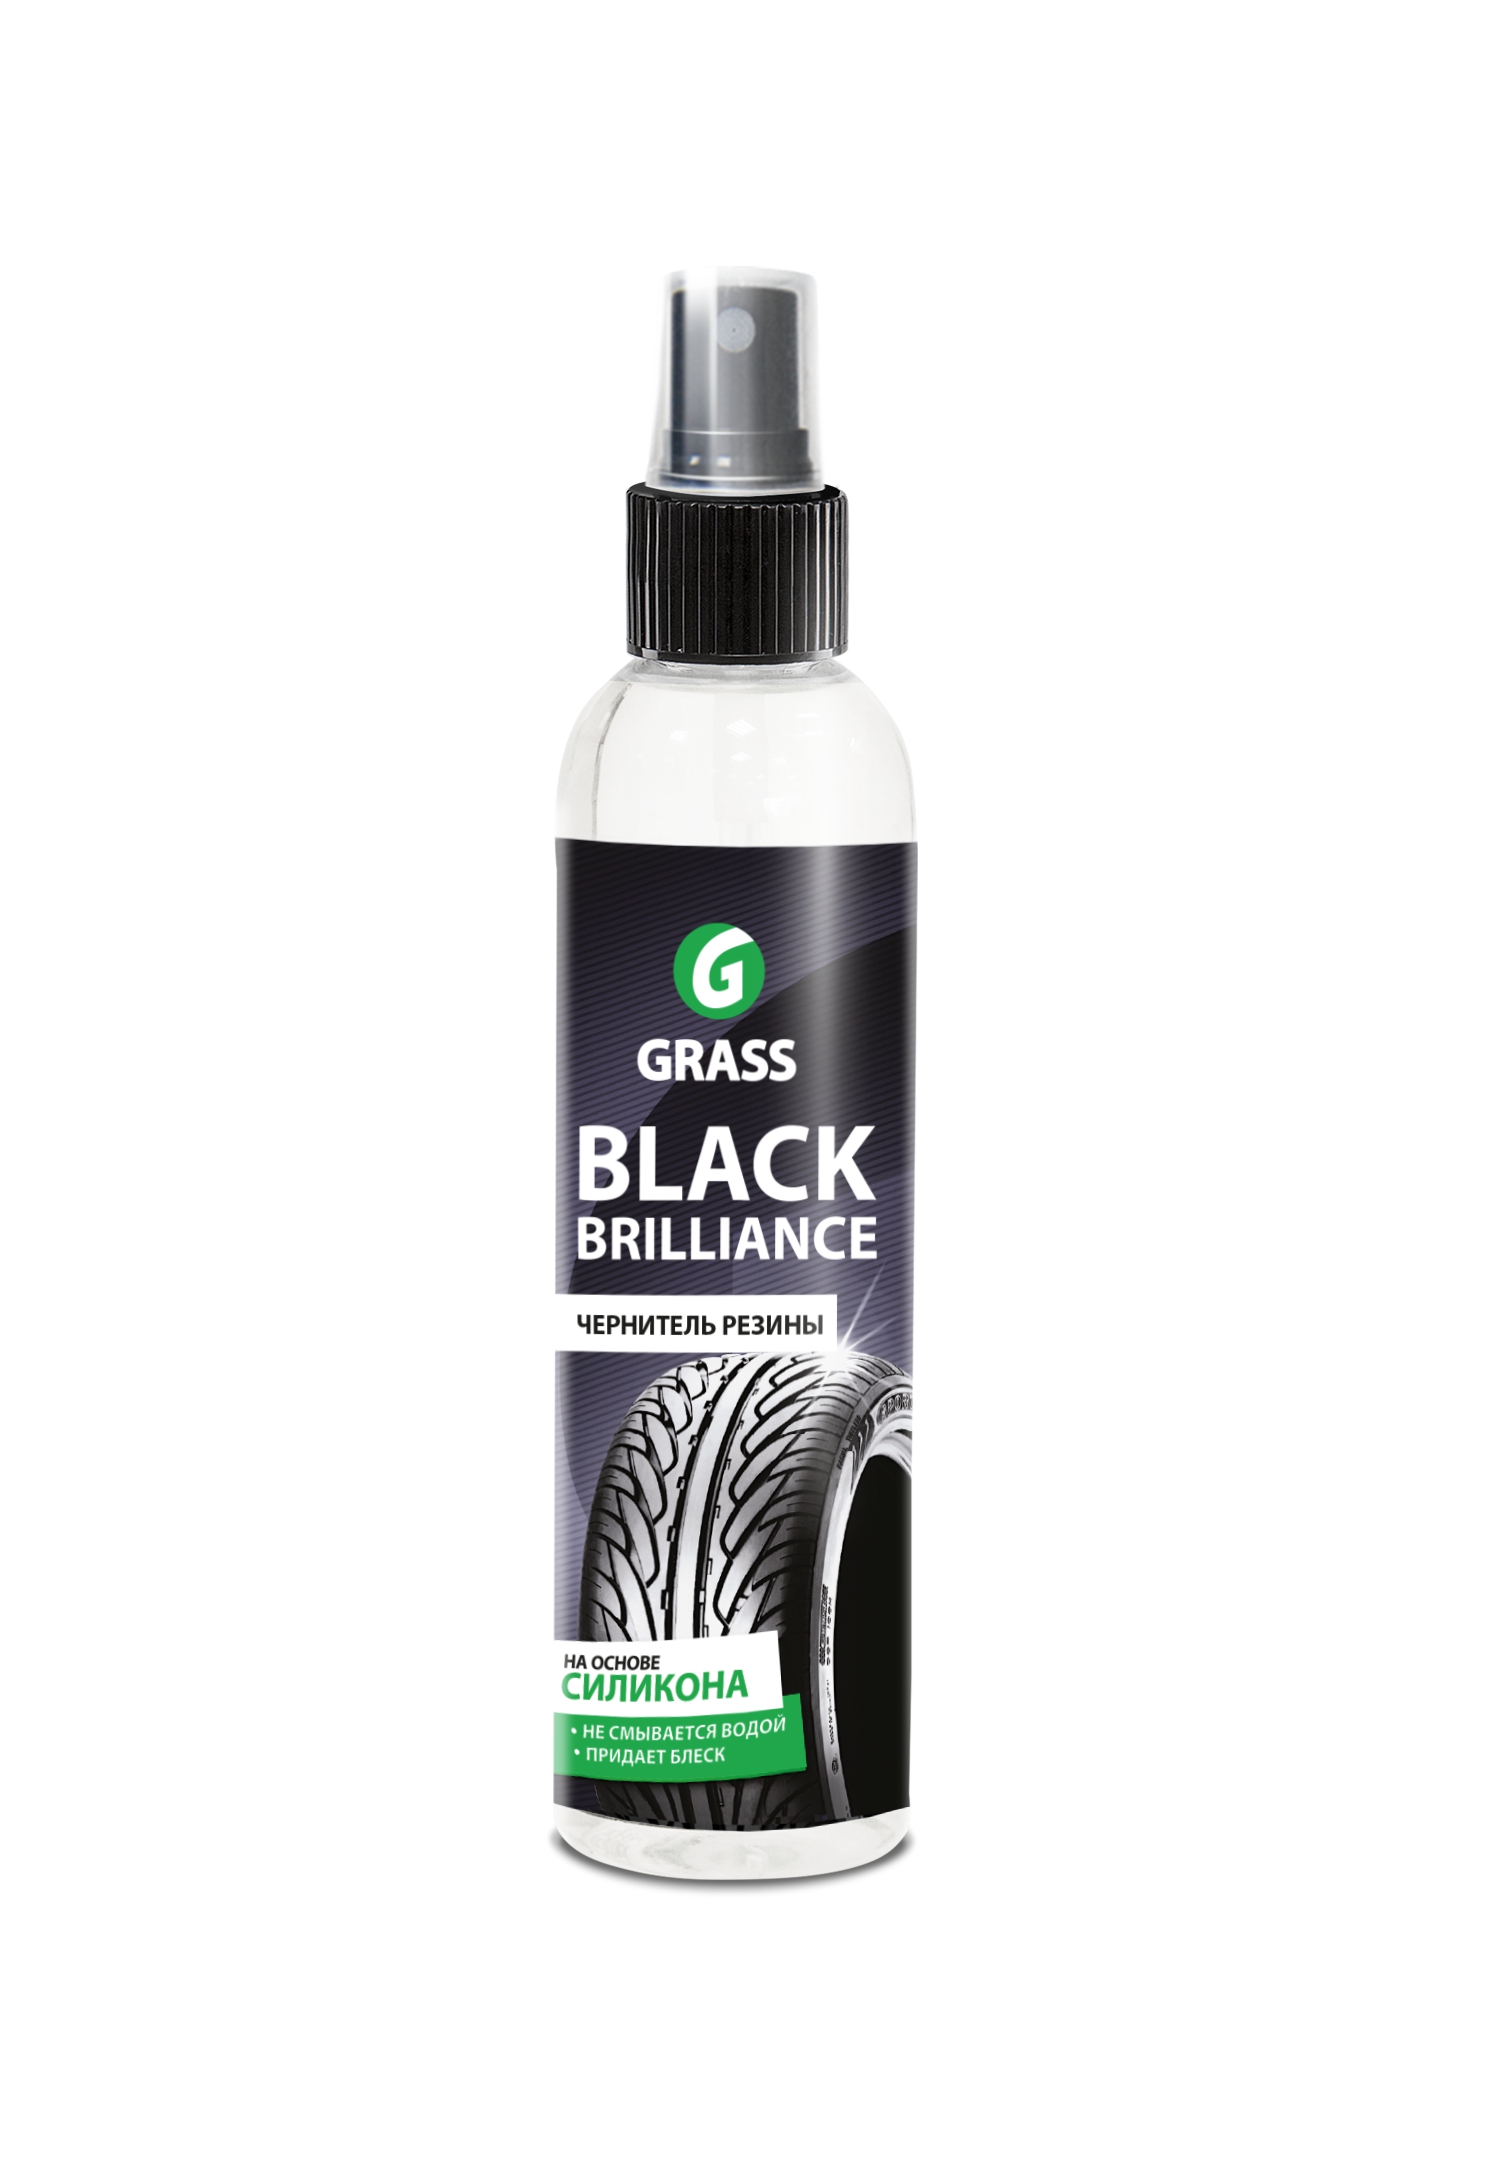 Black Brilliance Чернитель резины 250 мл GRASS Grass  152250_1